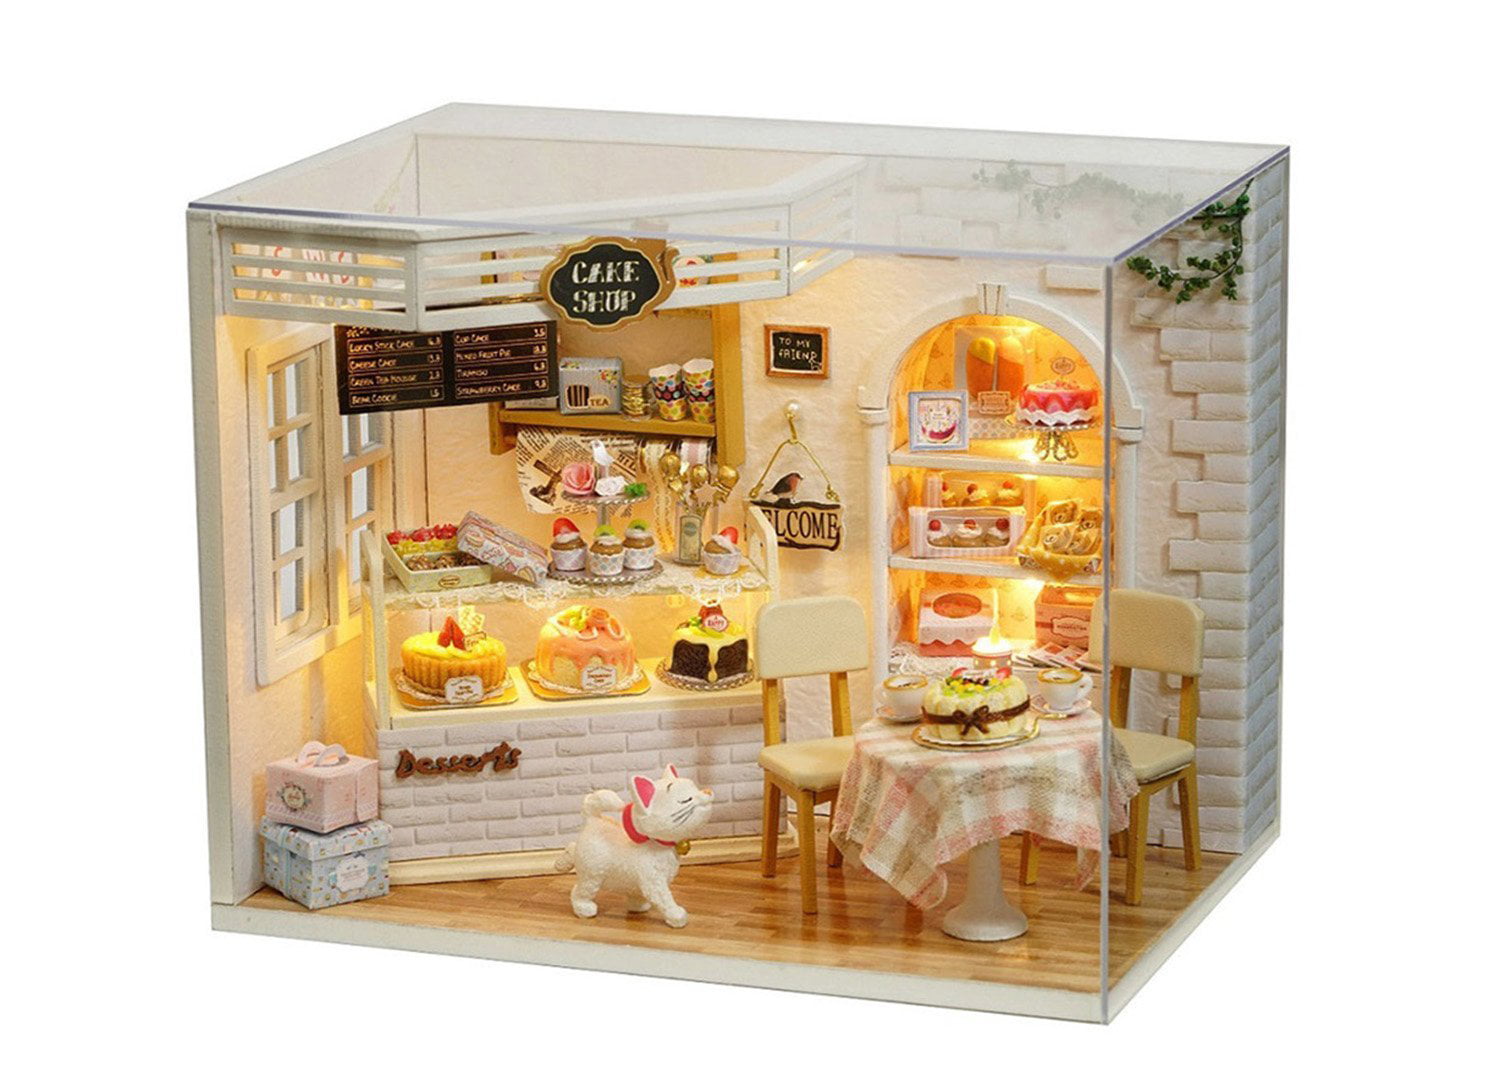 DIY Wooden DollHouse Kit Plus Dust CuteBee Dollhouse Miniature with Furniture 